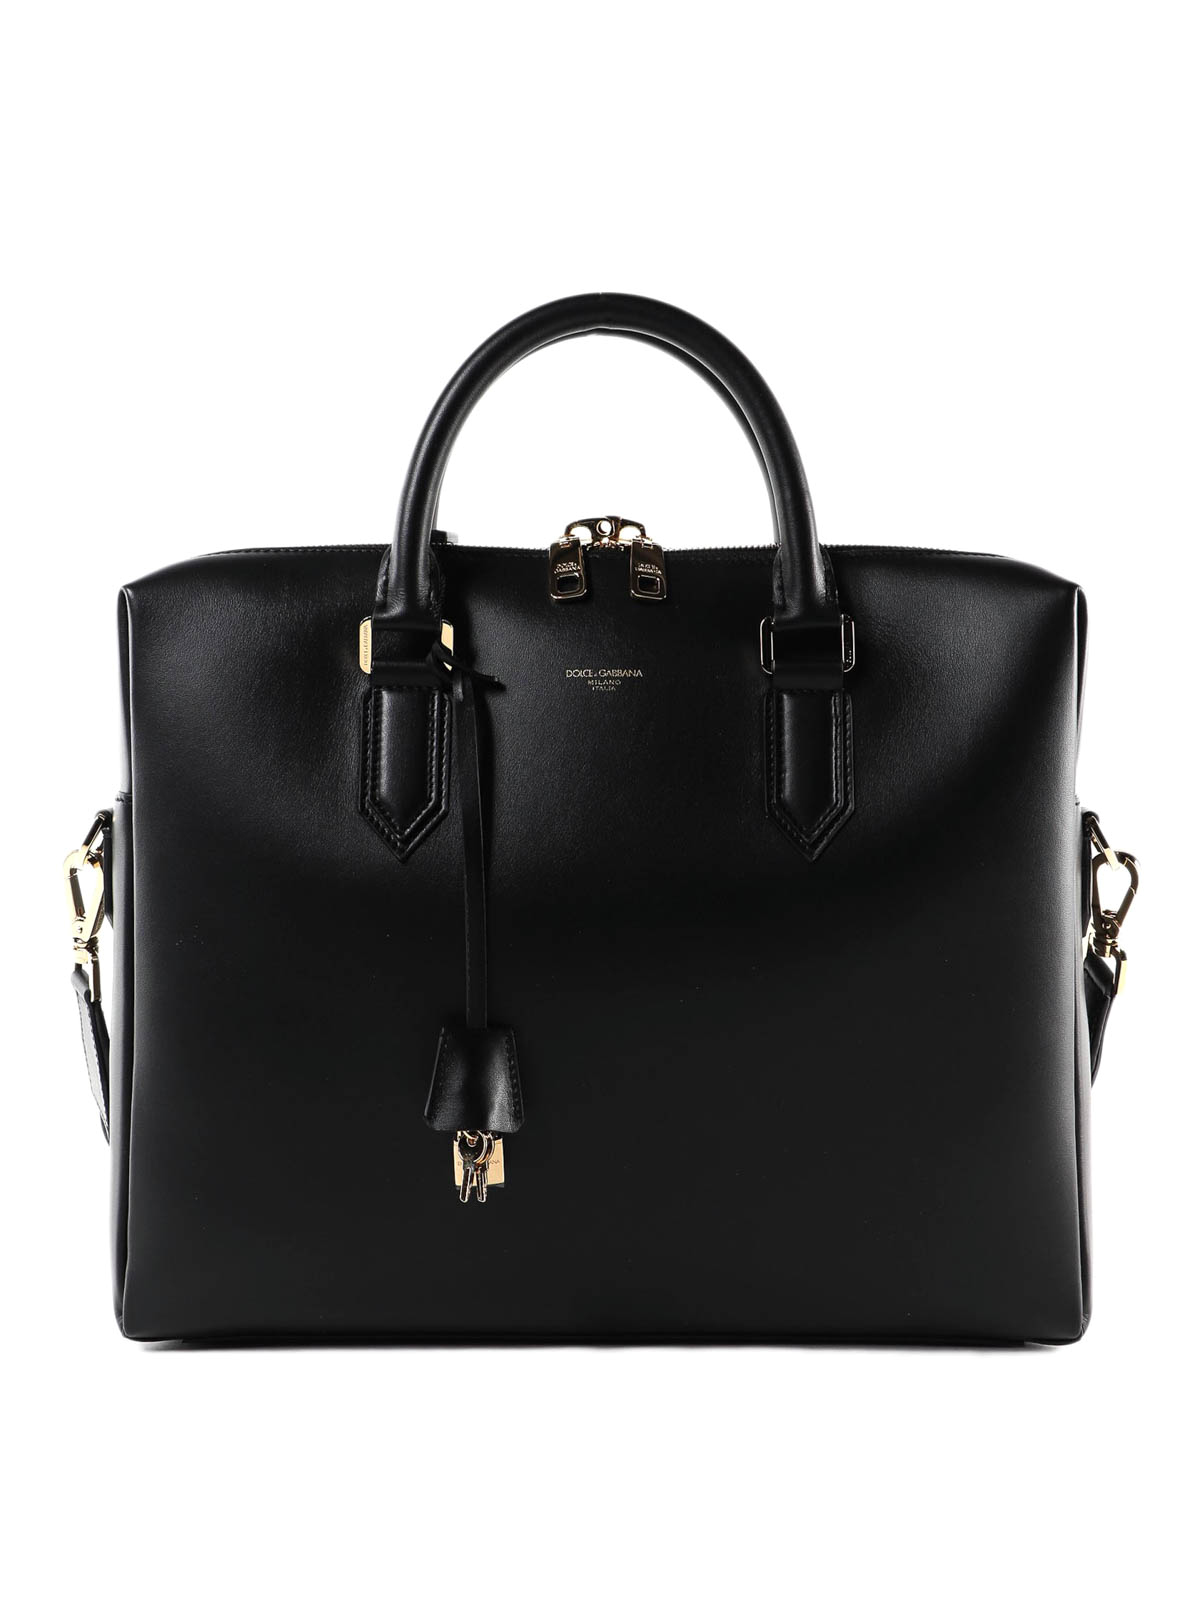 Dolce E Gabbana Mens Black Leather Briefcase Atterley Men Accessories Bags Laptop Bags 